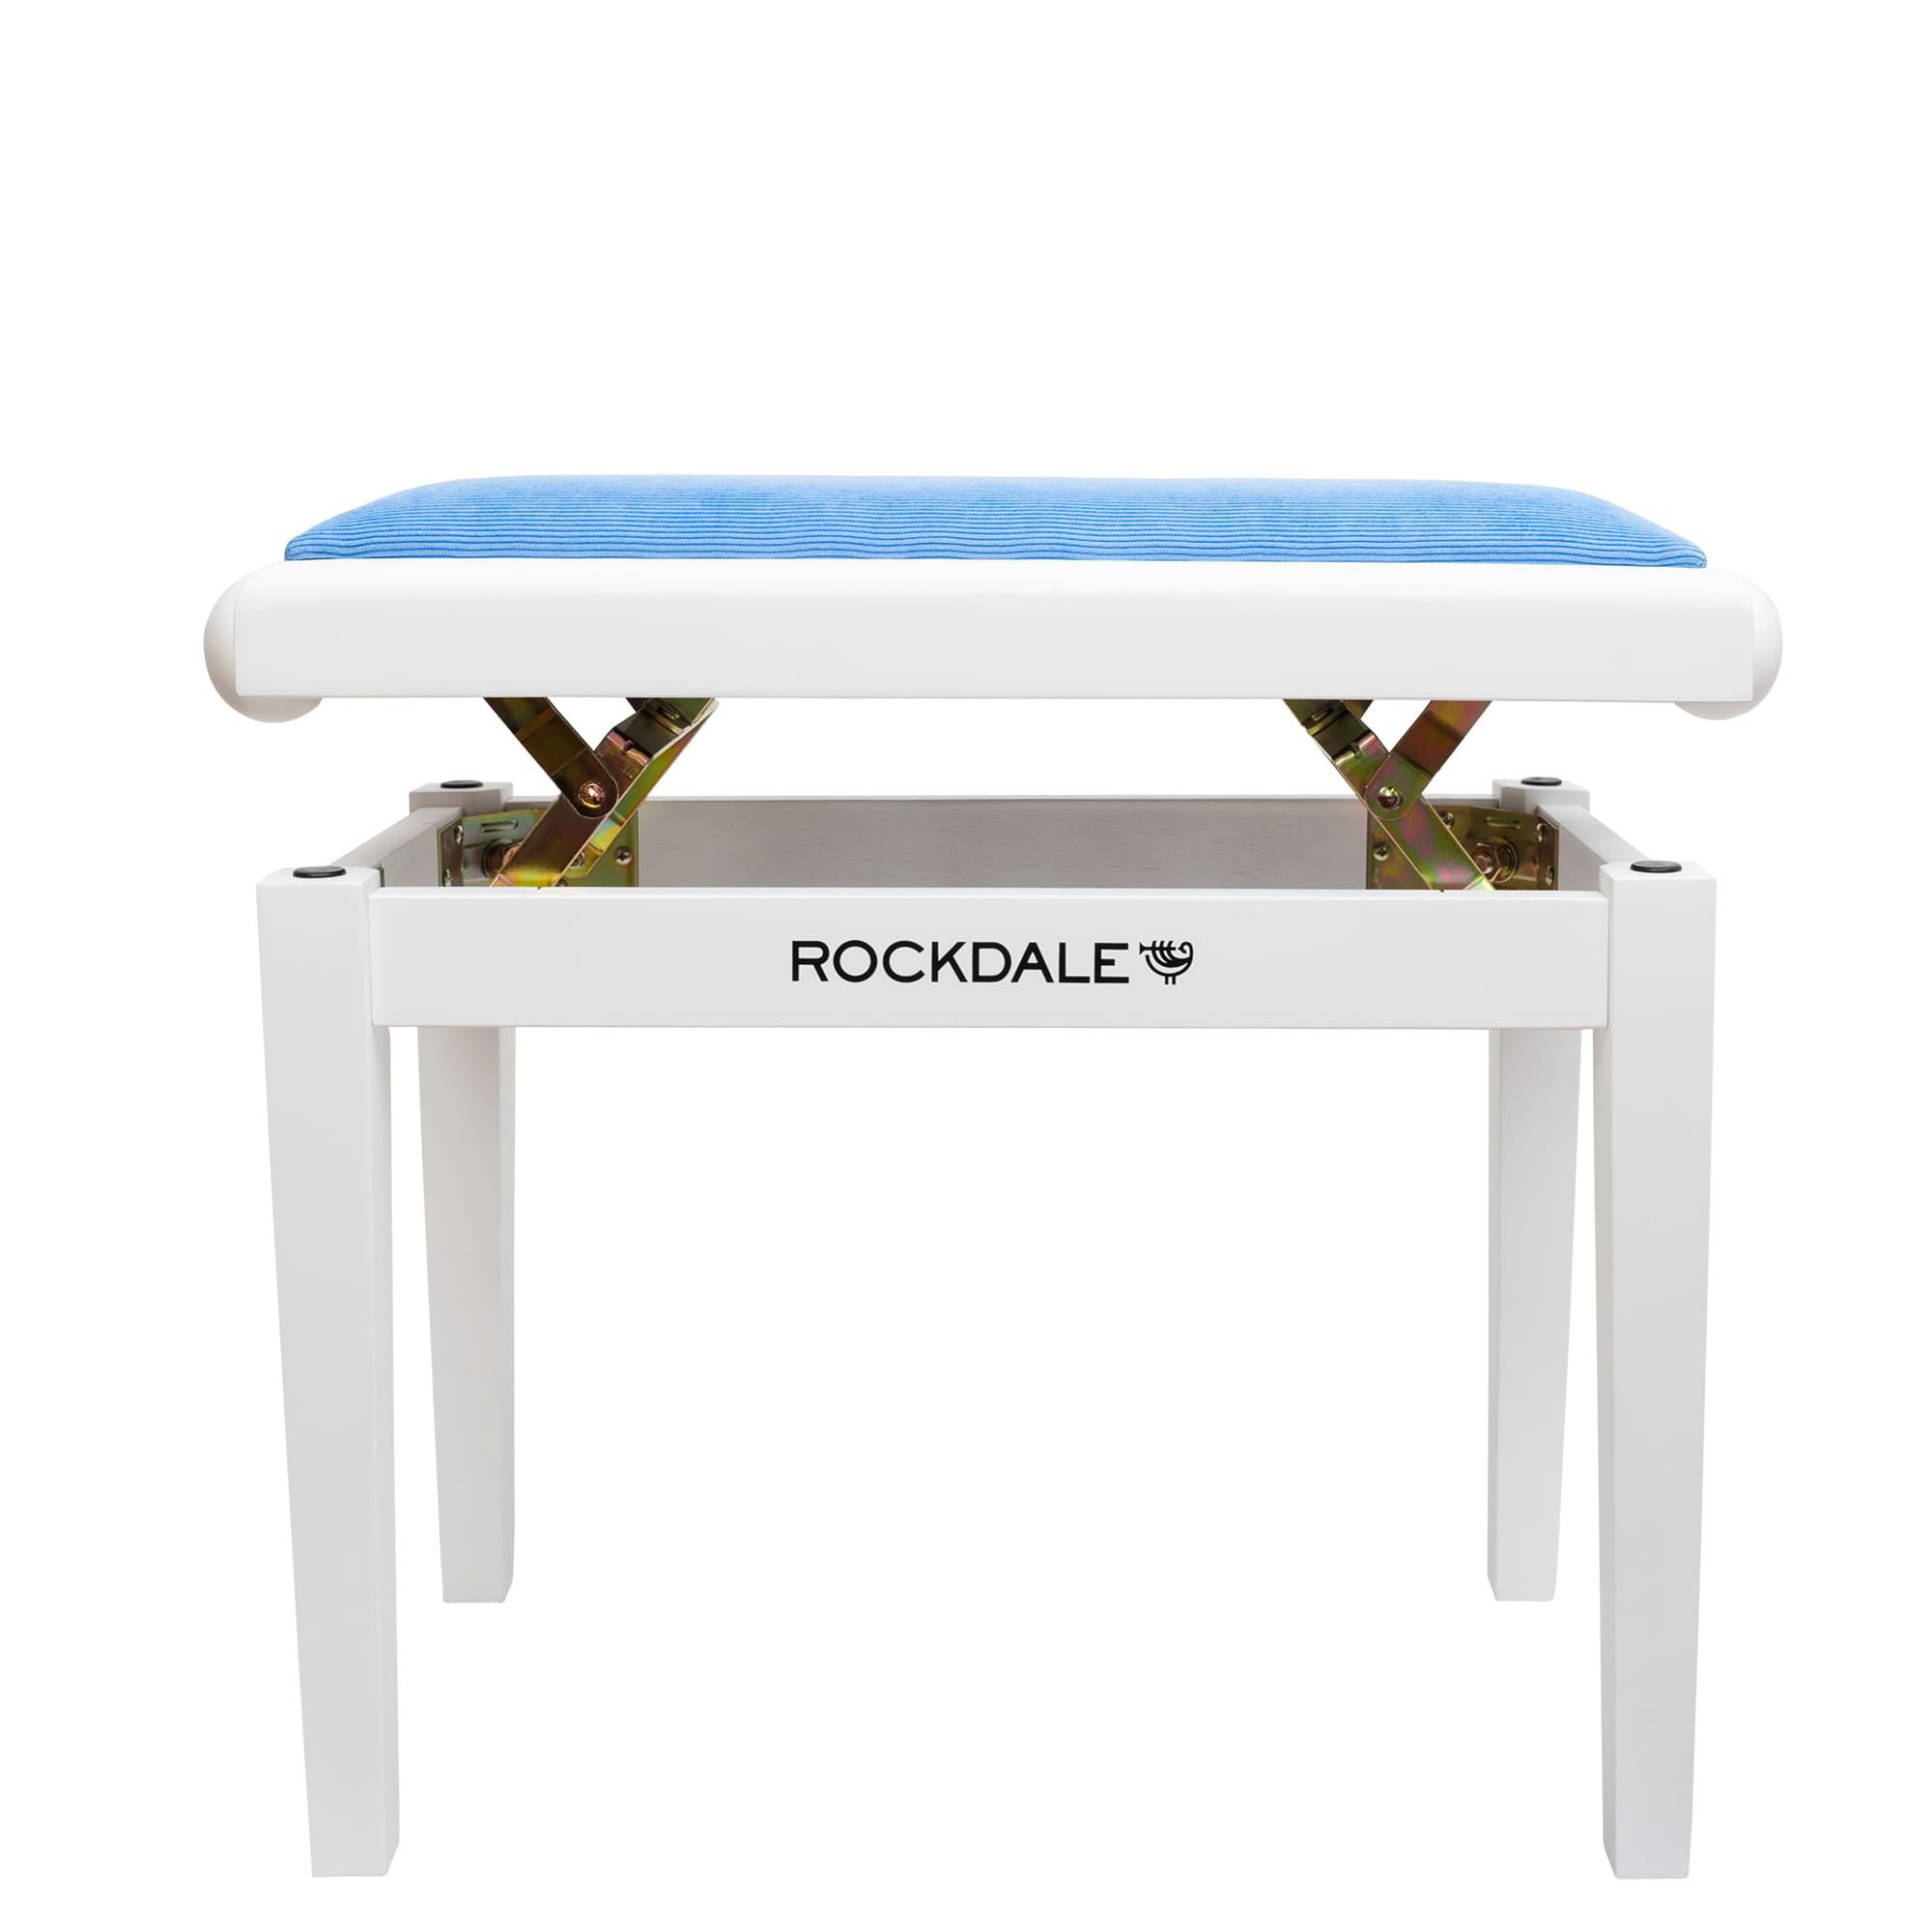 Rockdale RHAPSODY 131 SV WHITE BLUE Банкетки для клавишных инструментов